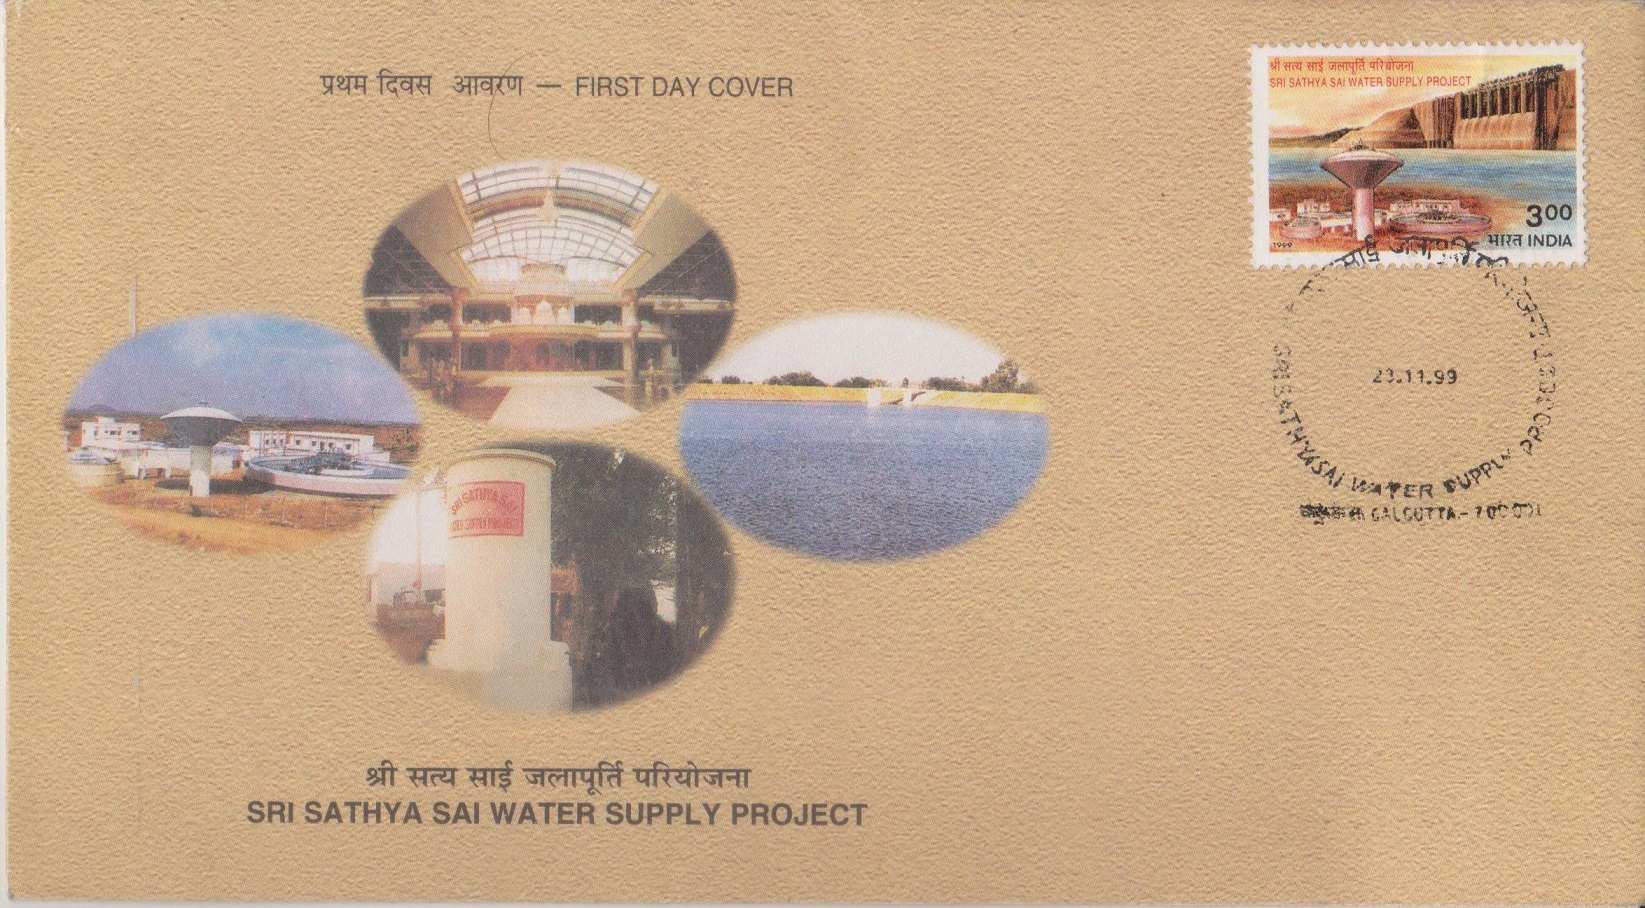 Works of Sri Sathya Sai Central Trust